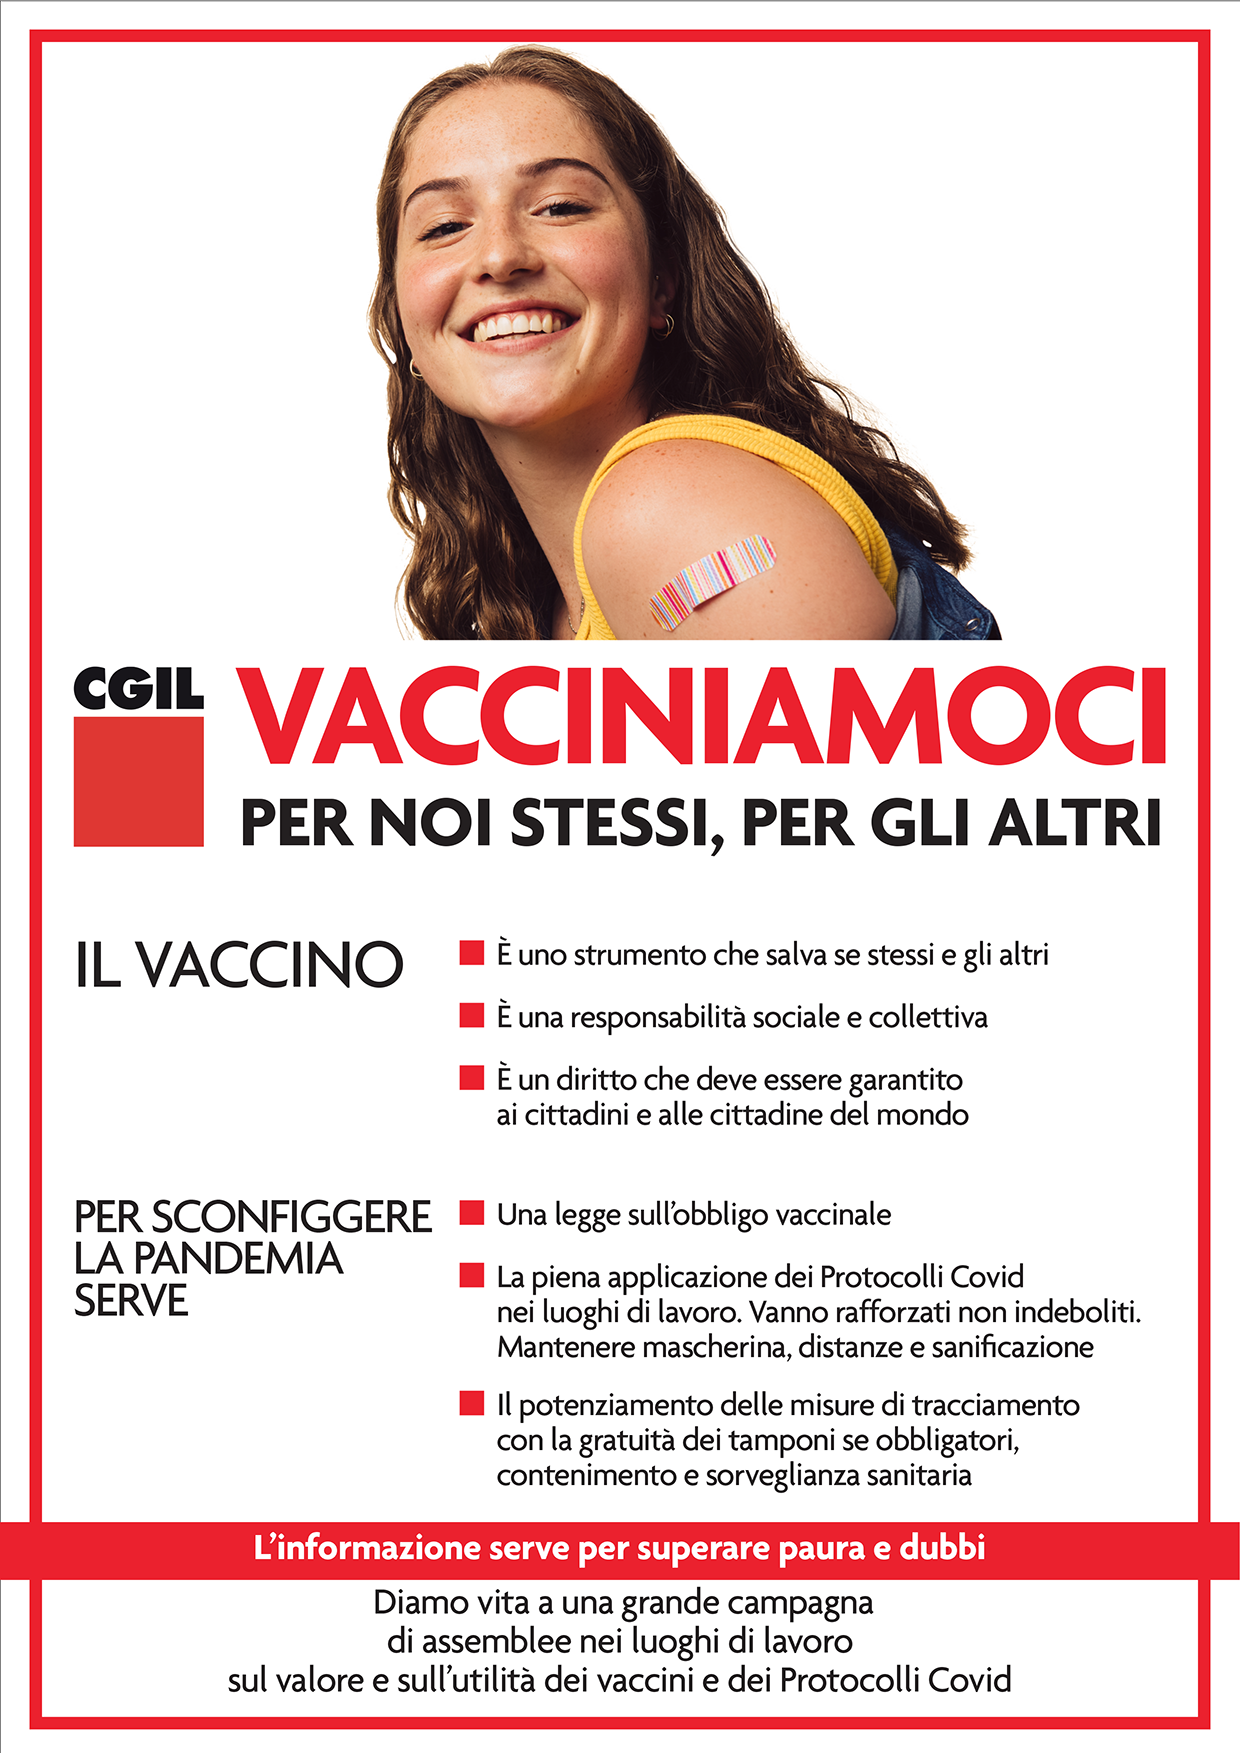 cgil-vacciniamoci-a4.png